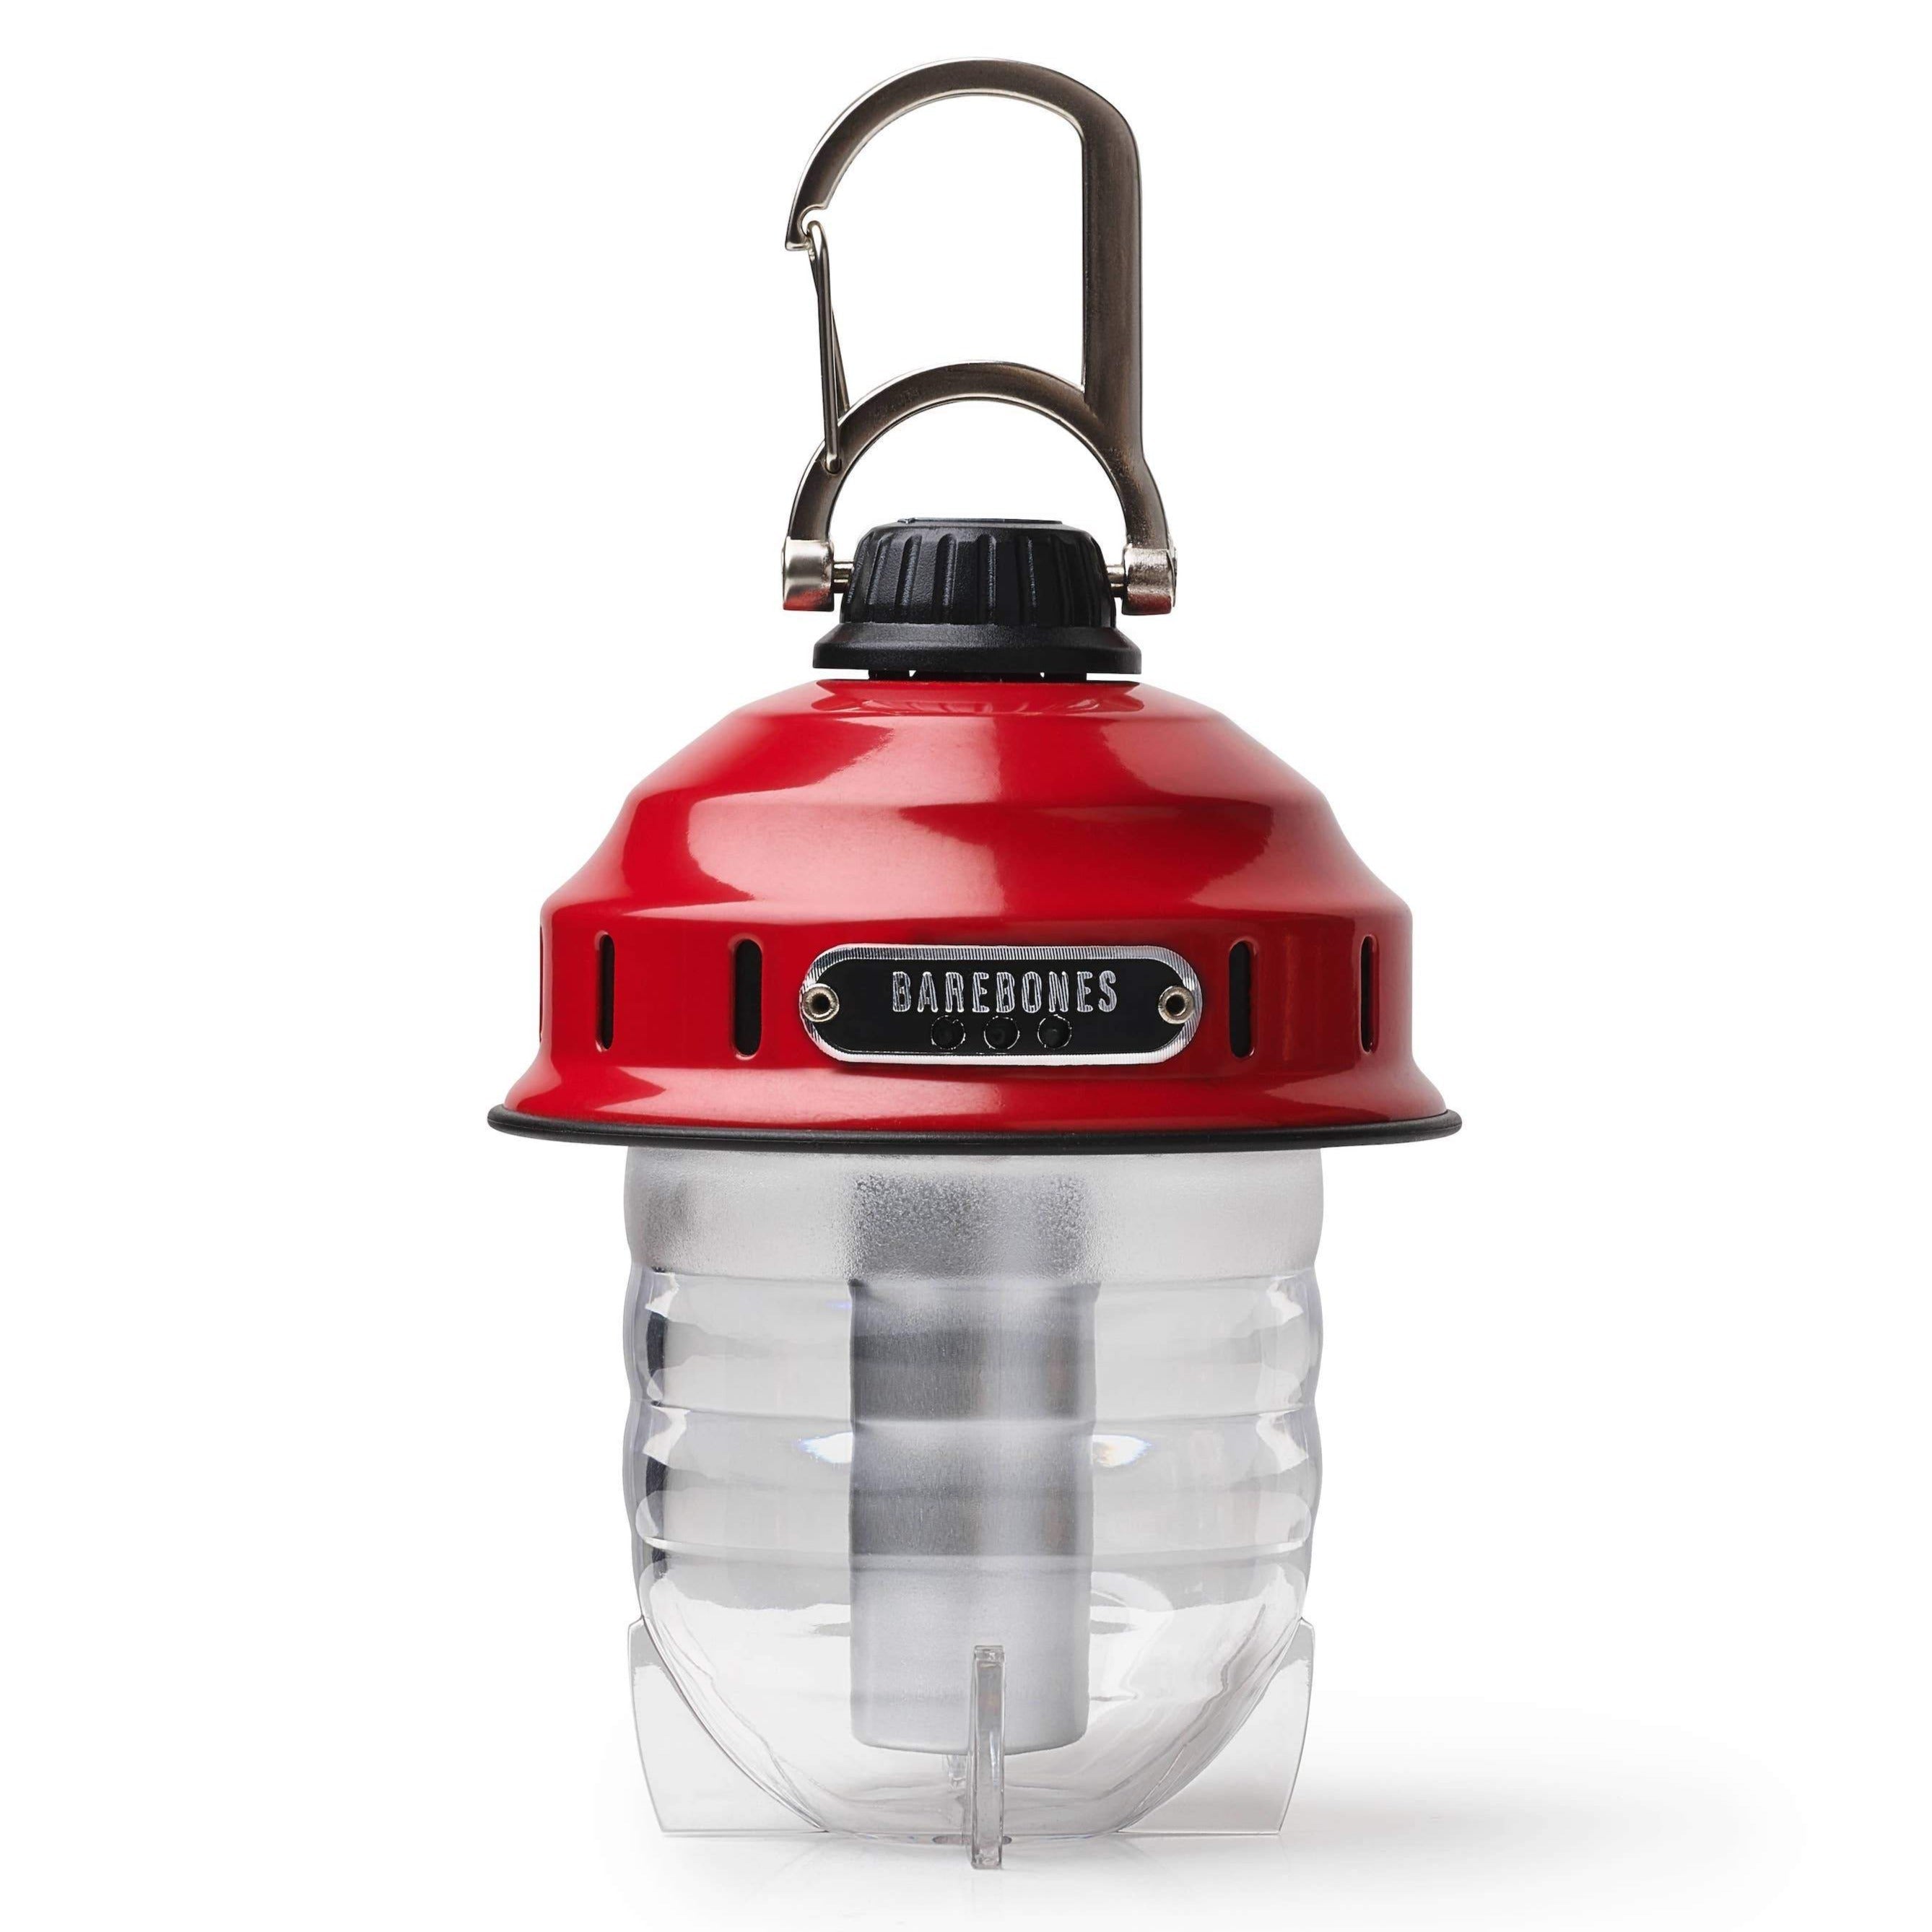 Barebones | Beacon Hanging Lantern With Rechargeable Battery & Carabiner, Lanterns, Barebones, Defiance Outdoor Gear Co.